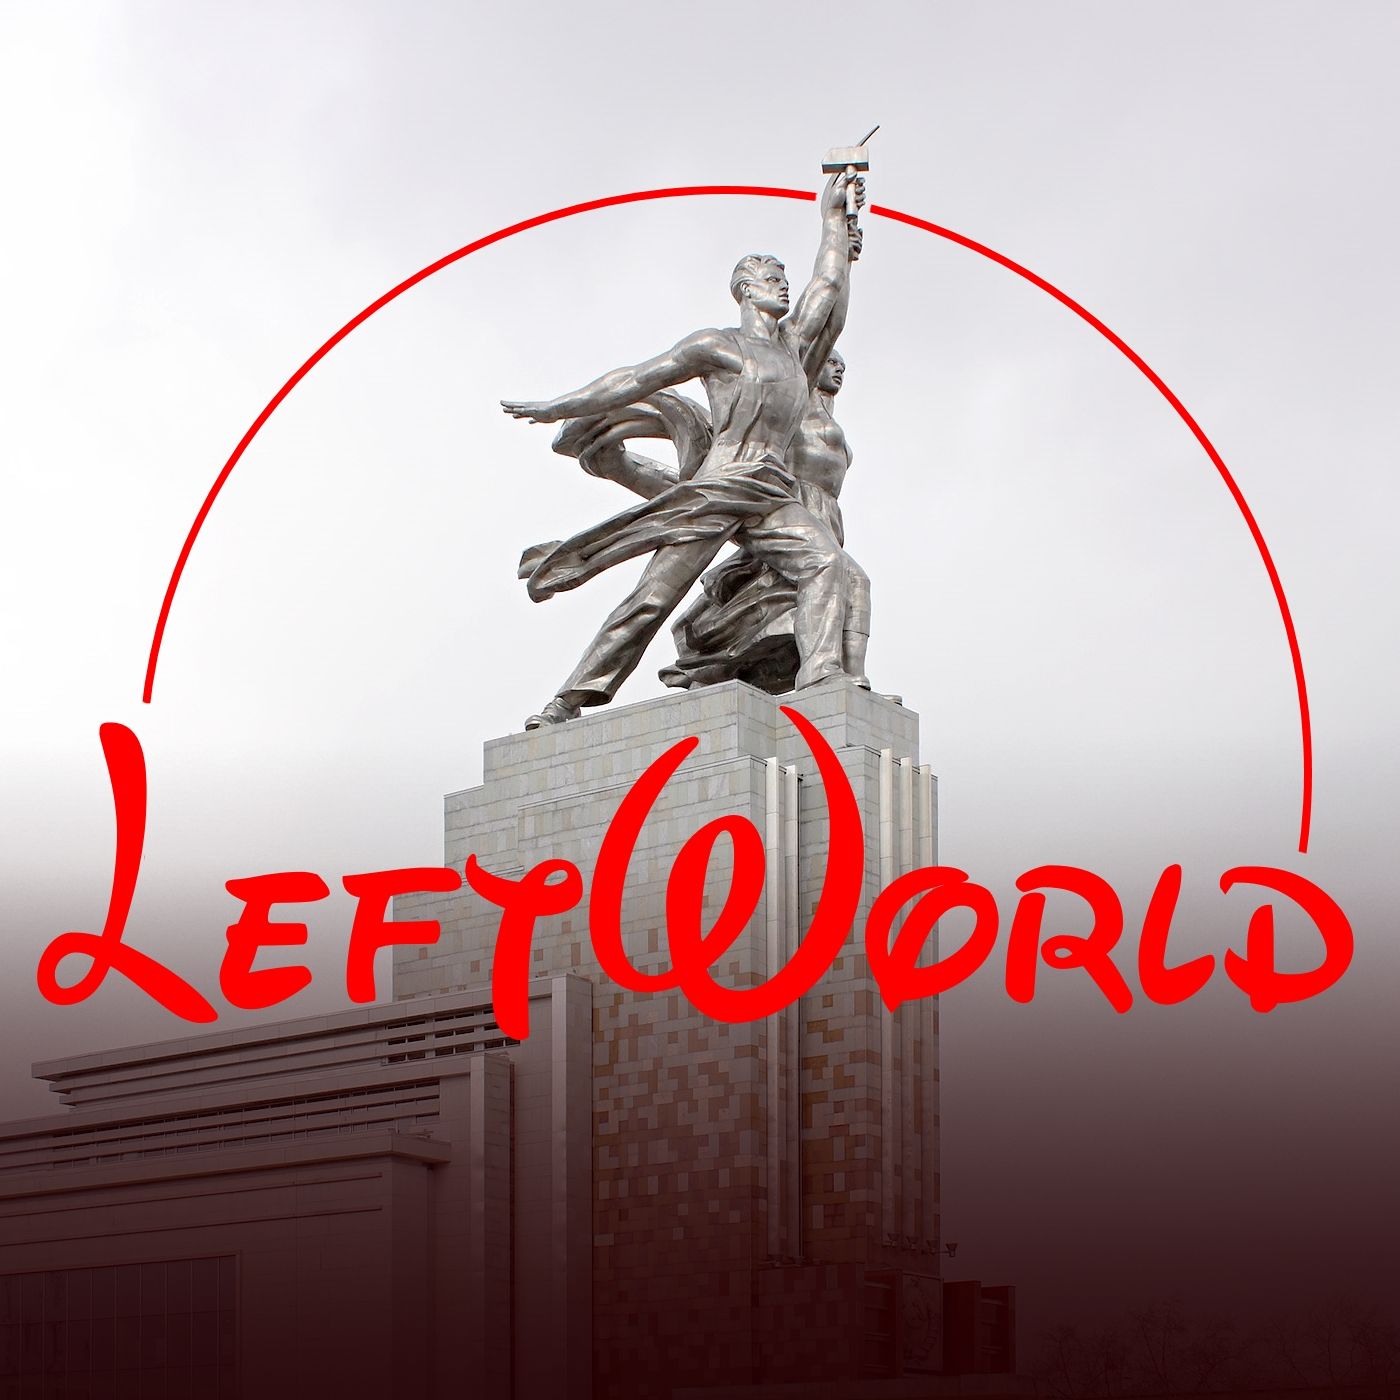 Leftworld